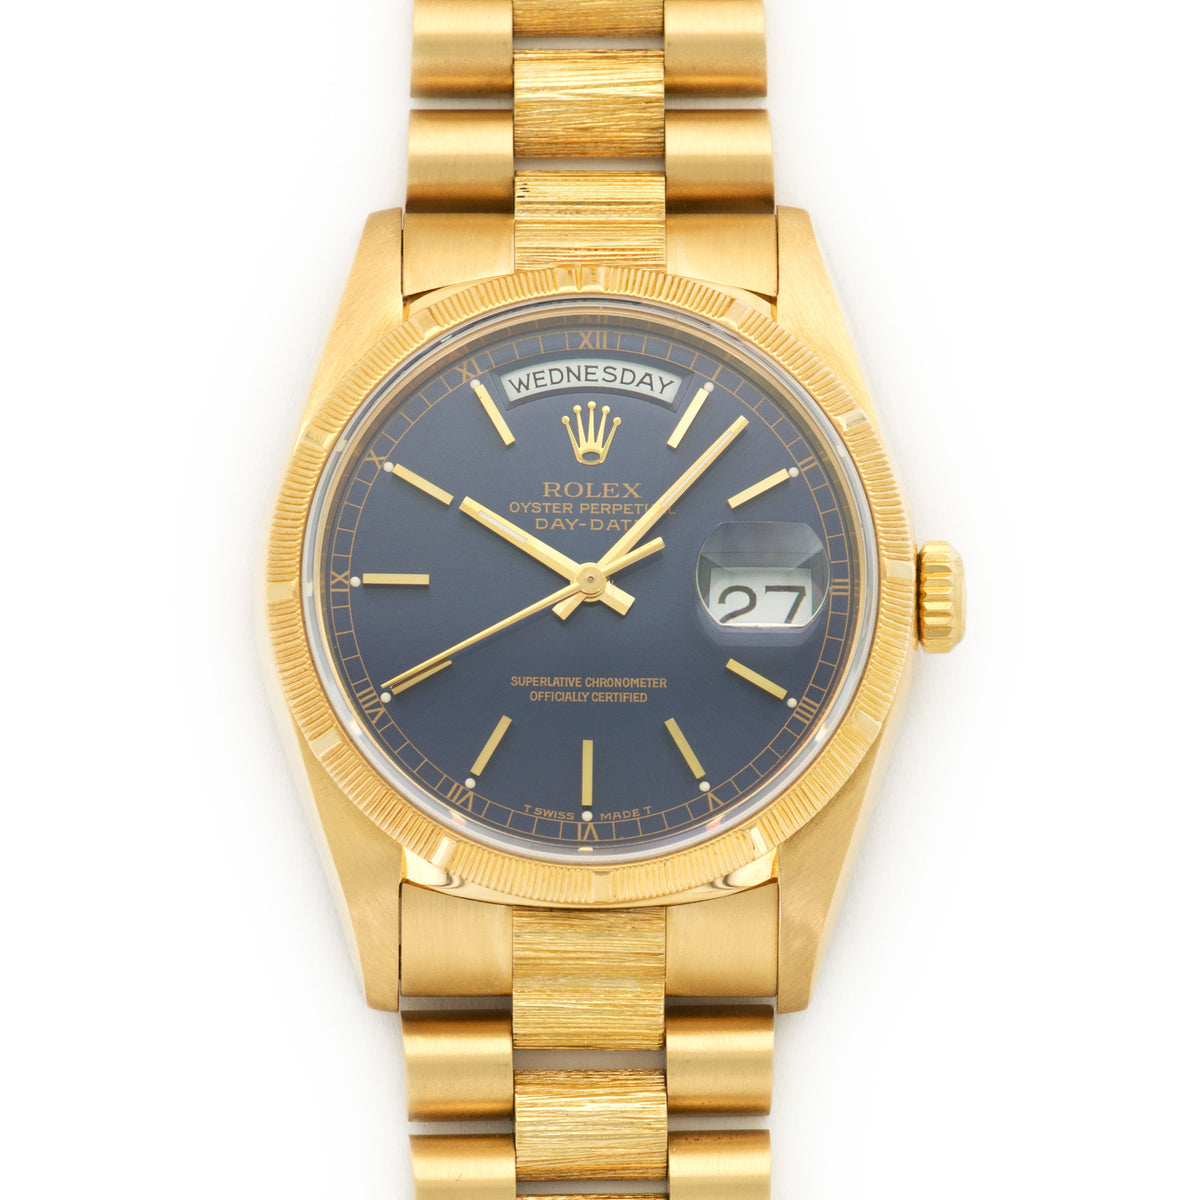 Rolex Day-Date 18248 18k YG – The Keystone Watches